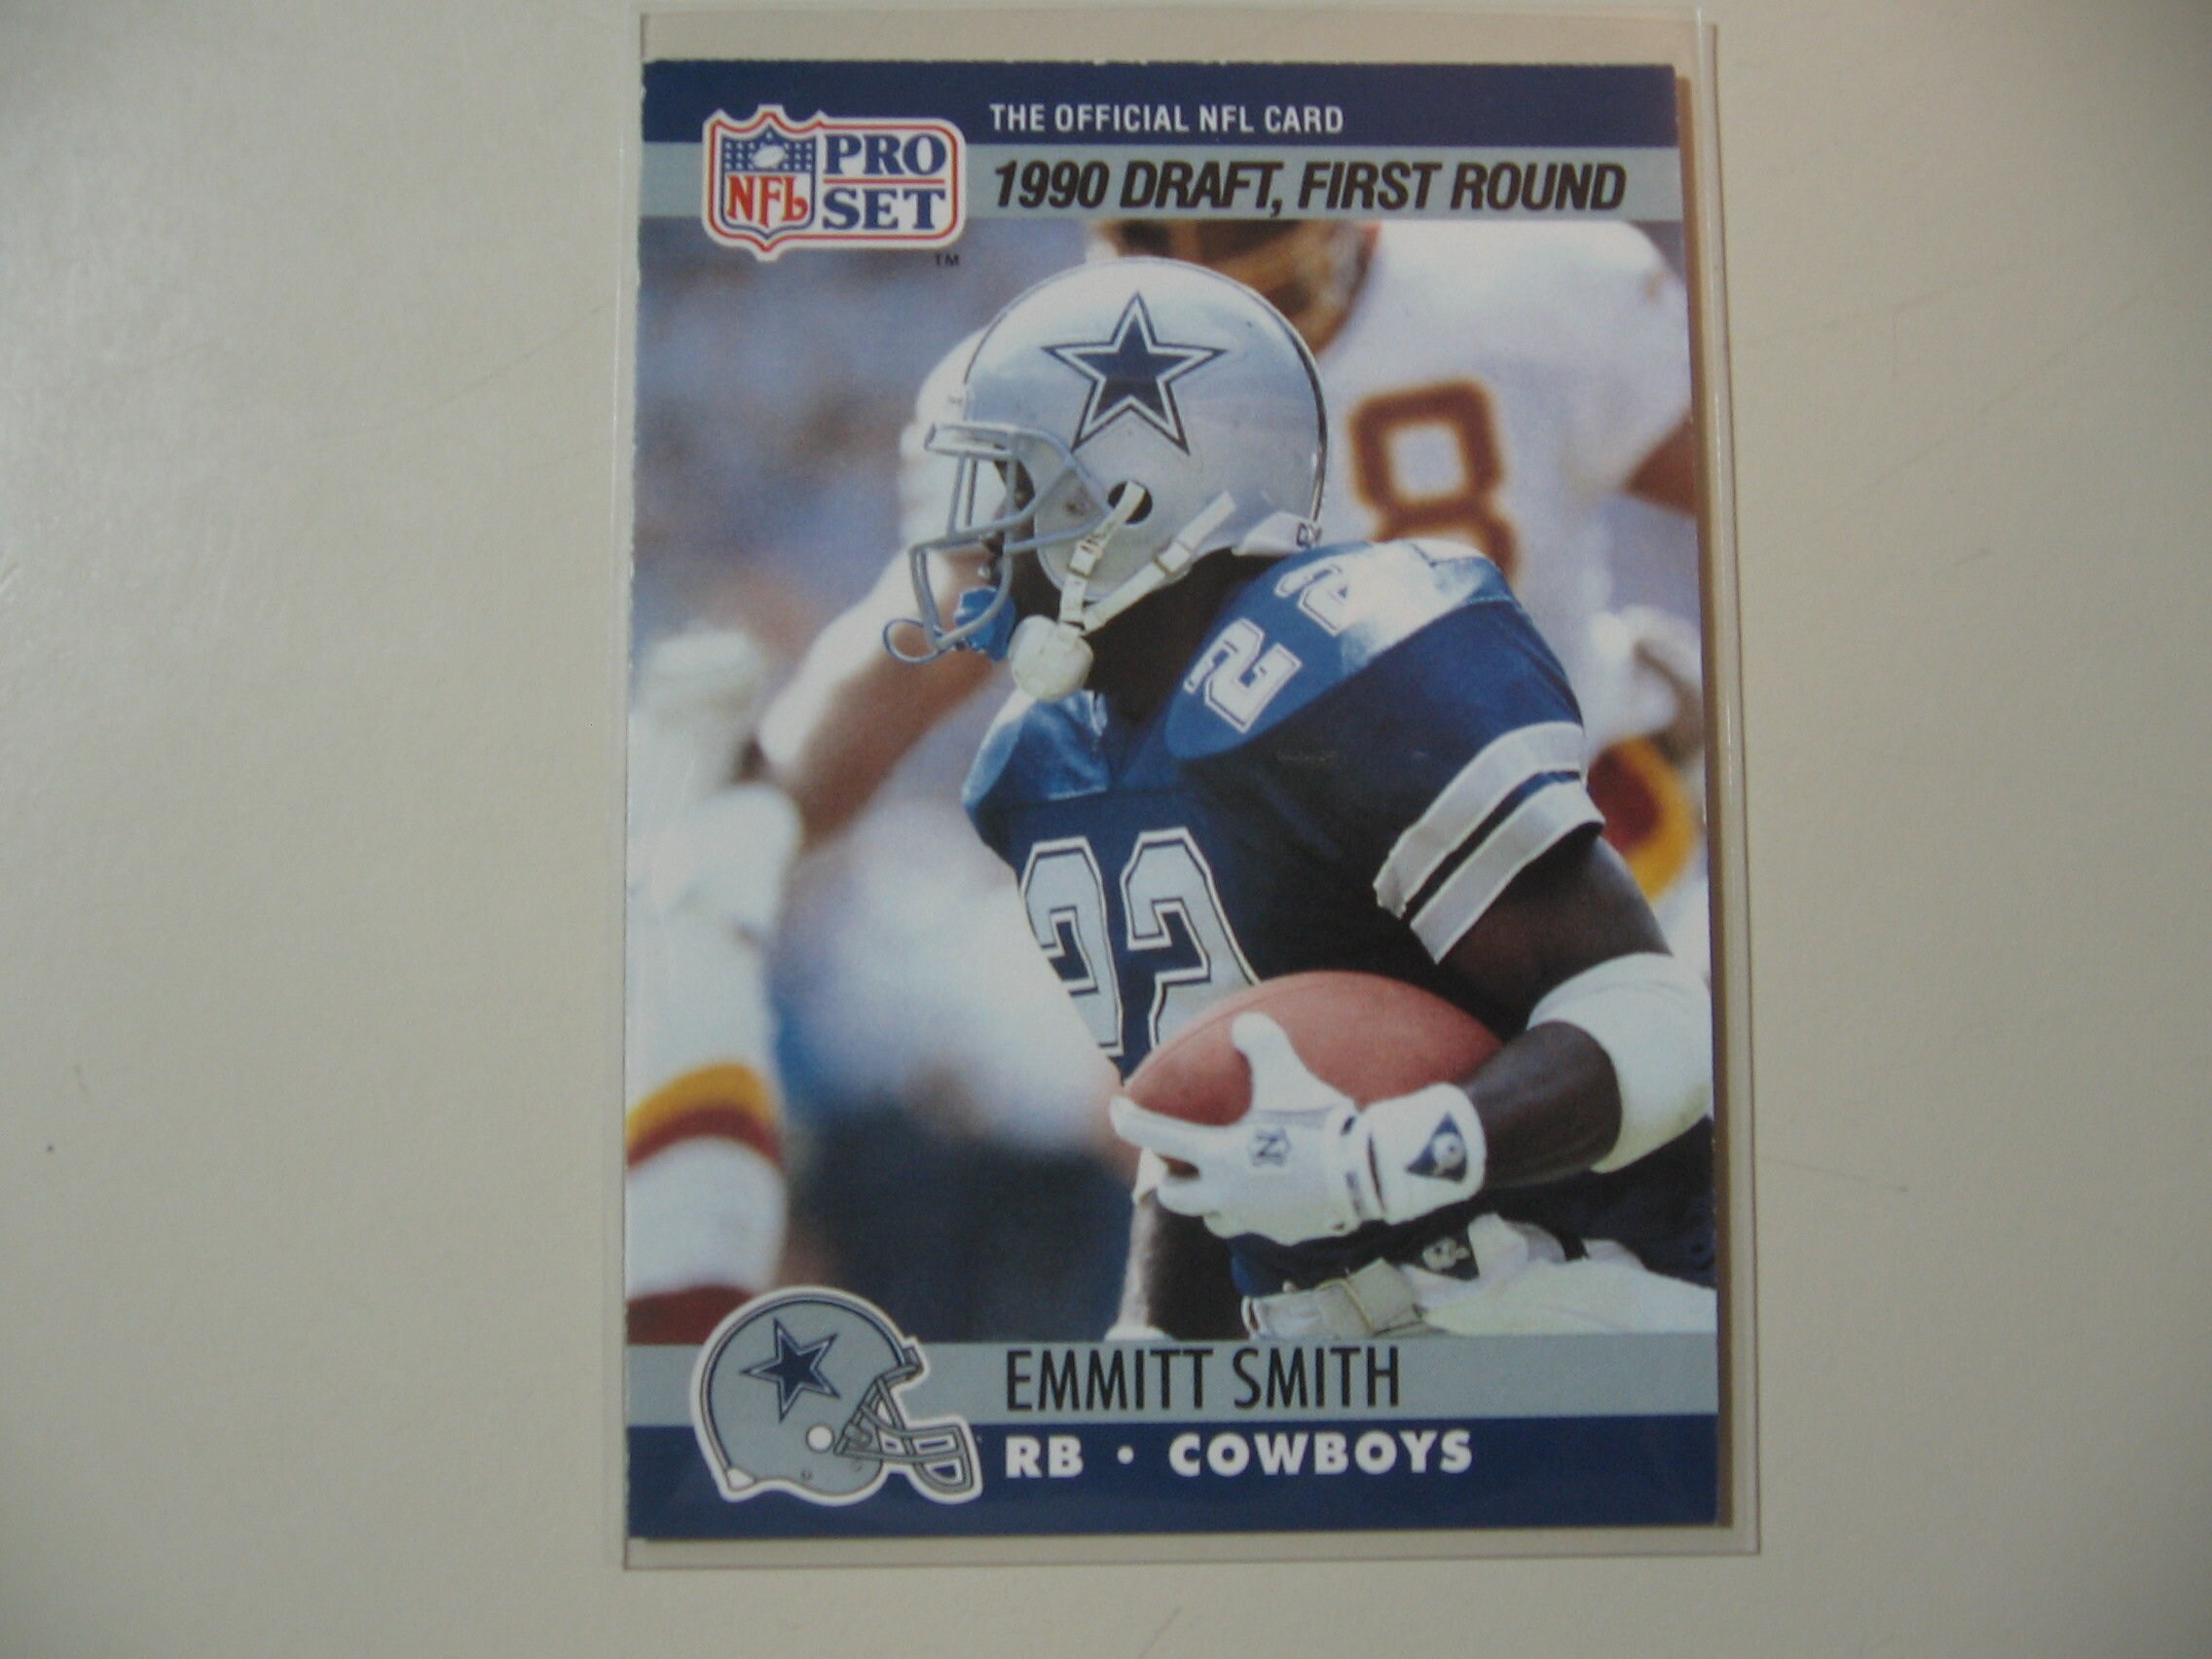 1990 Pro Set Emmitt Smith RC Rookie Football Card | Etsy